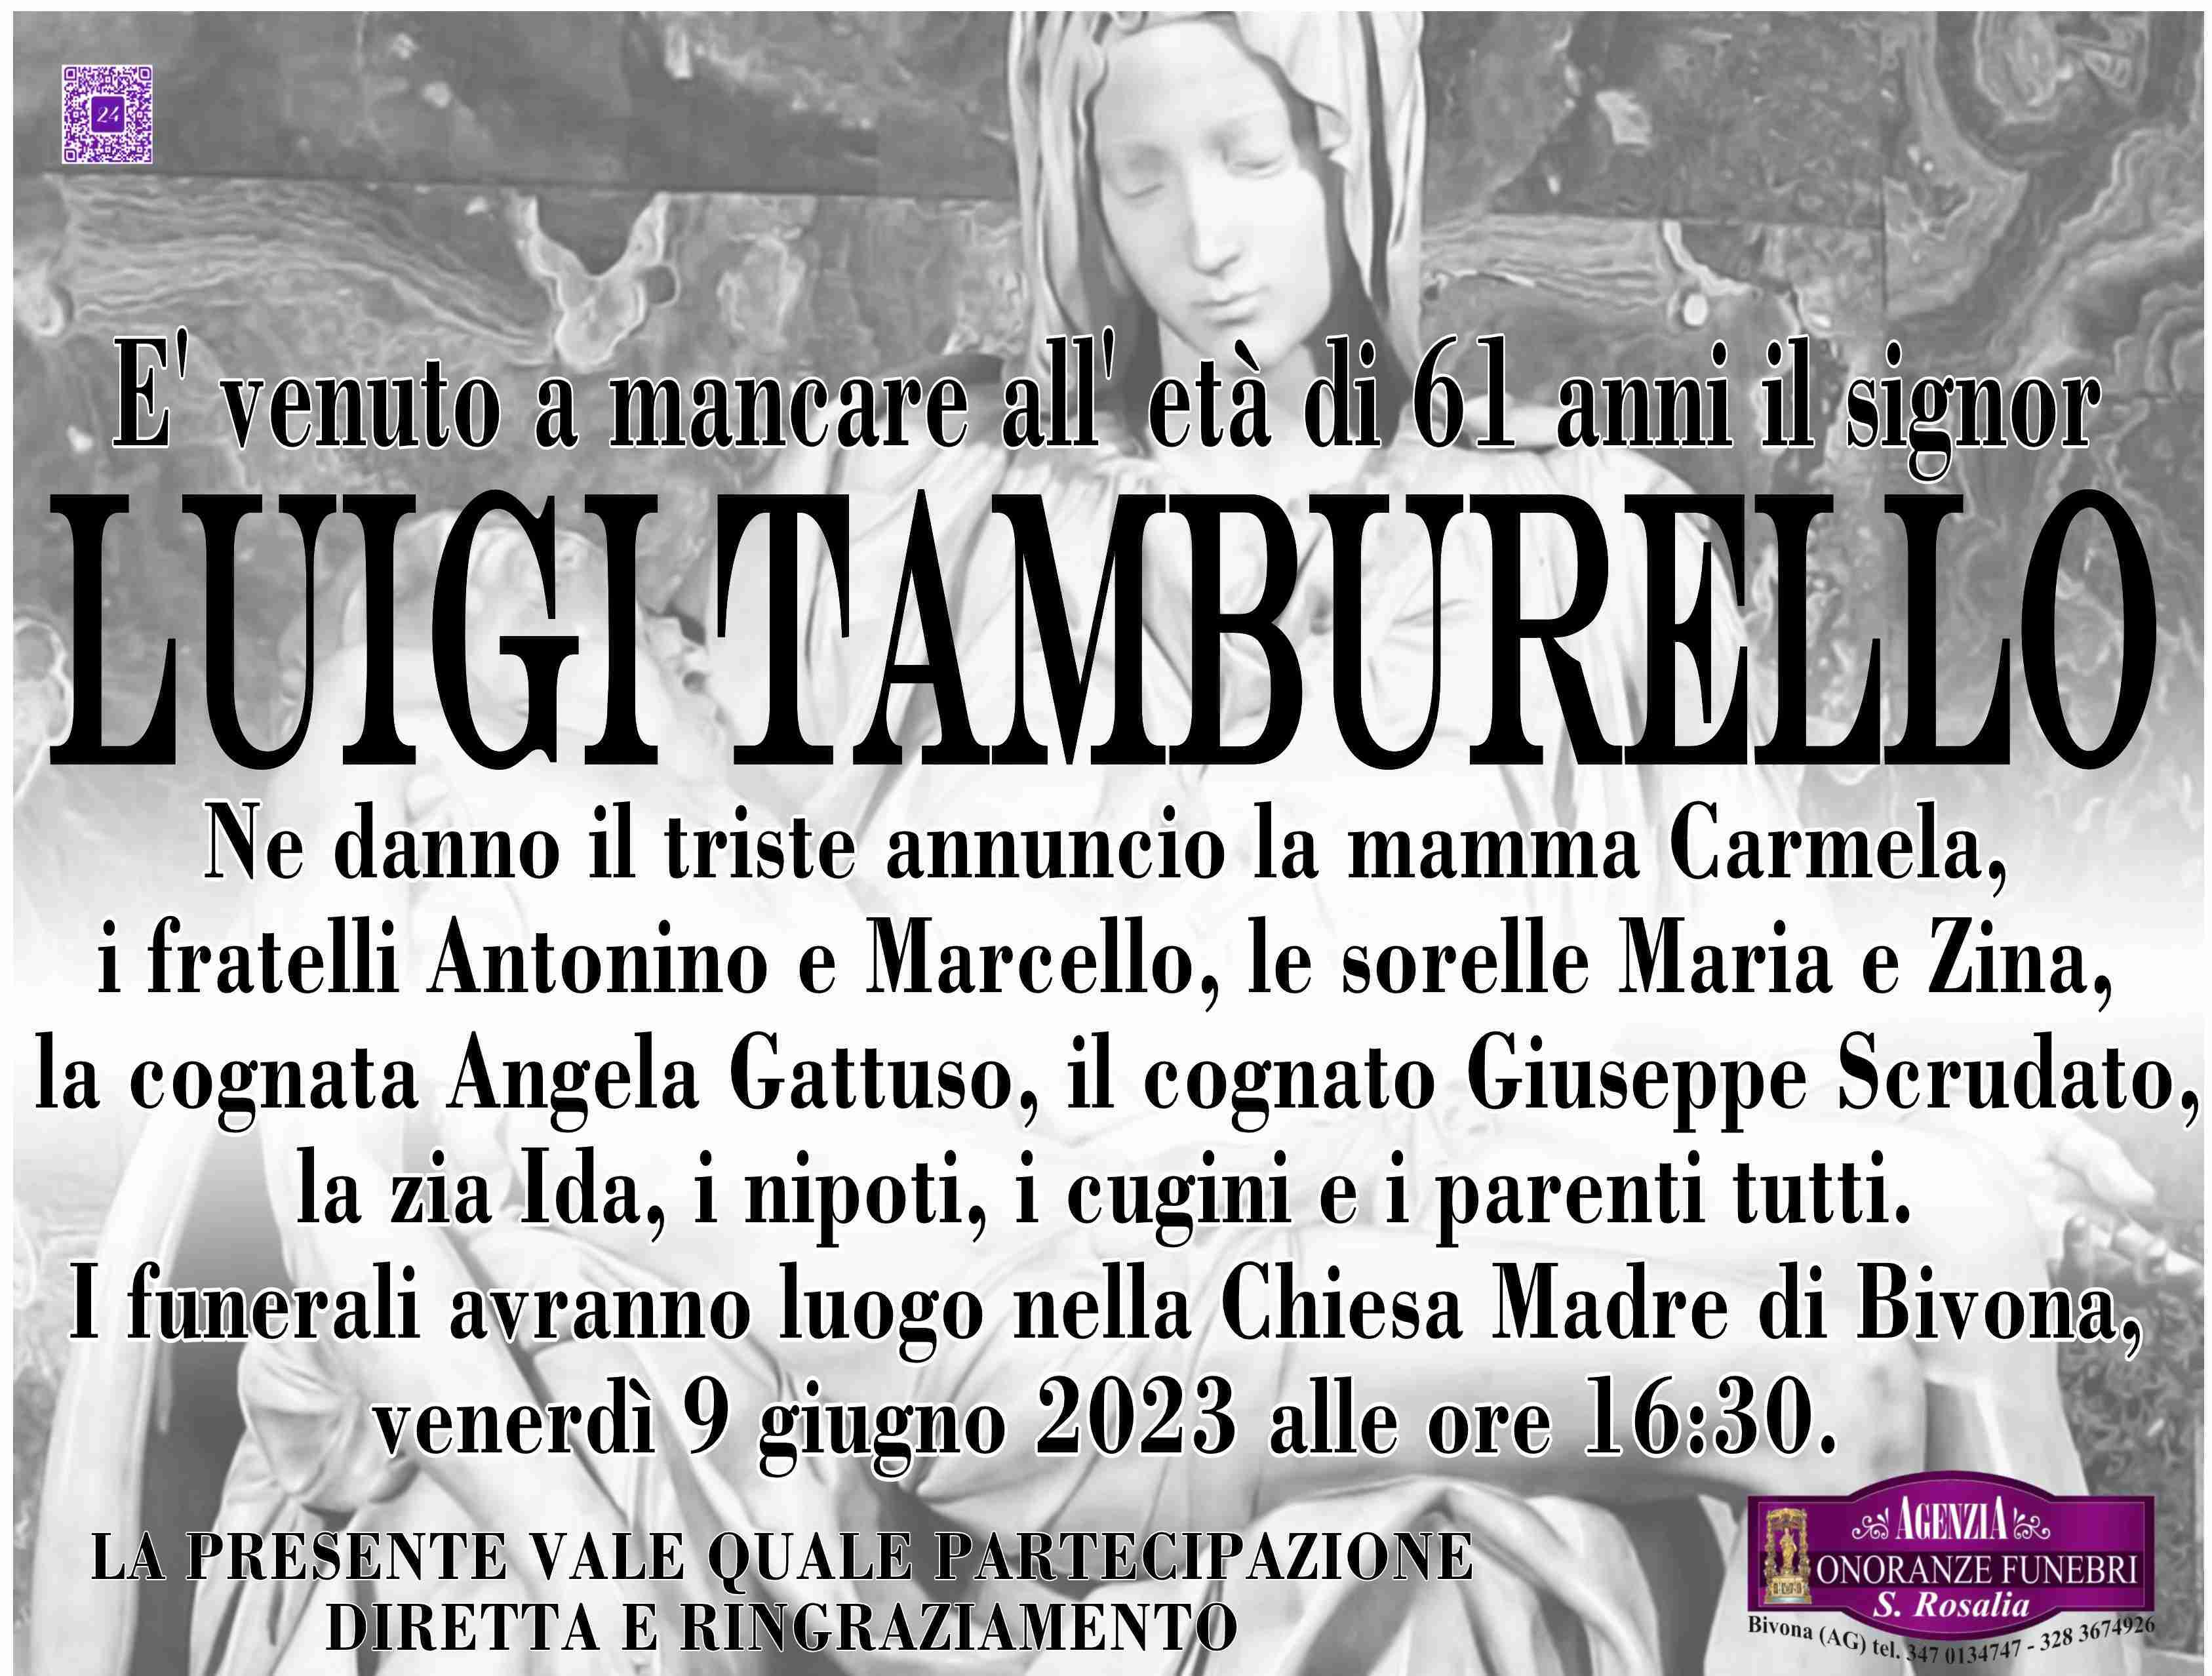 Luigi Tamburello